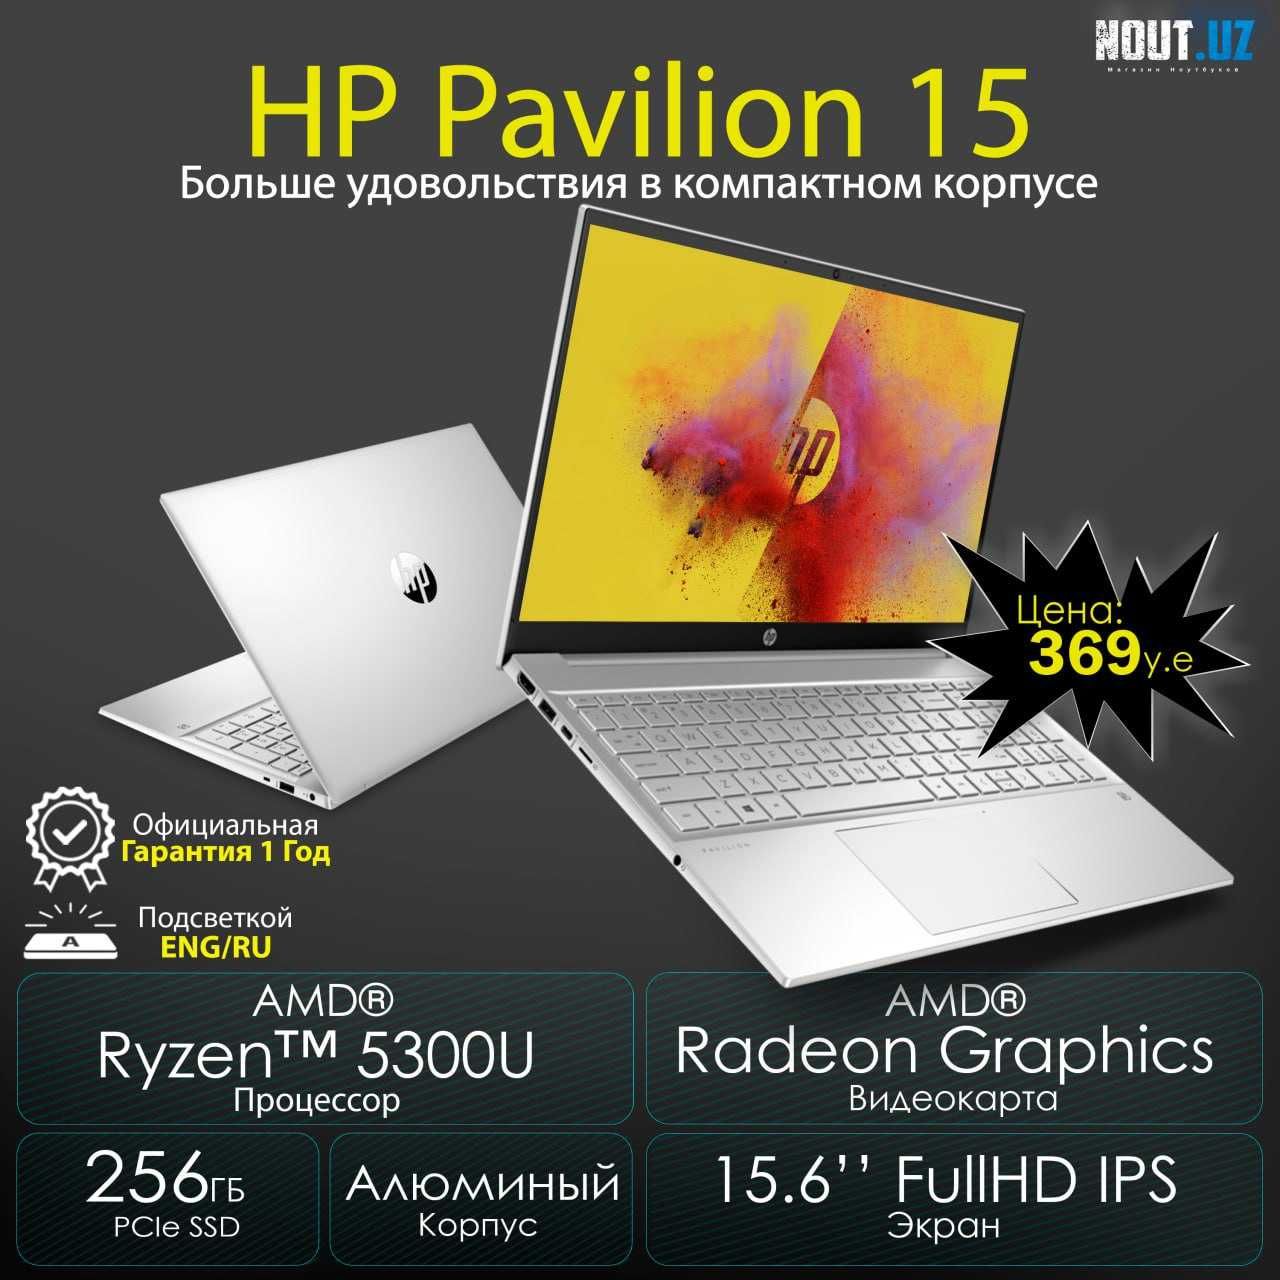 HP Pavilion 15 (Ryzen 5300U) Металл ! Магазин Nout.uz (369 S)